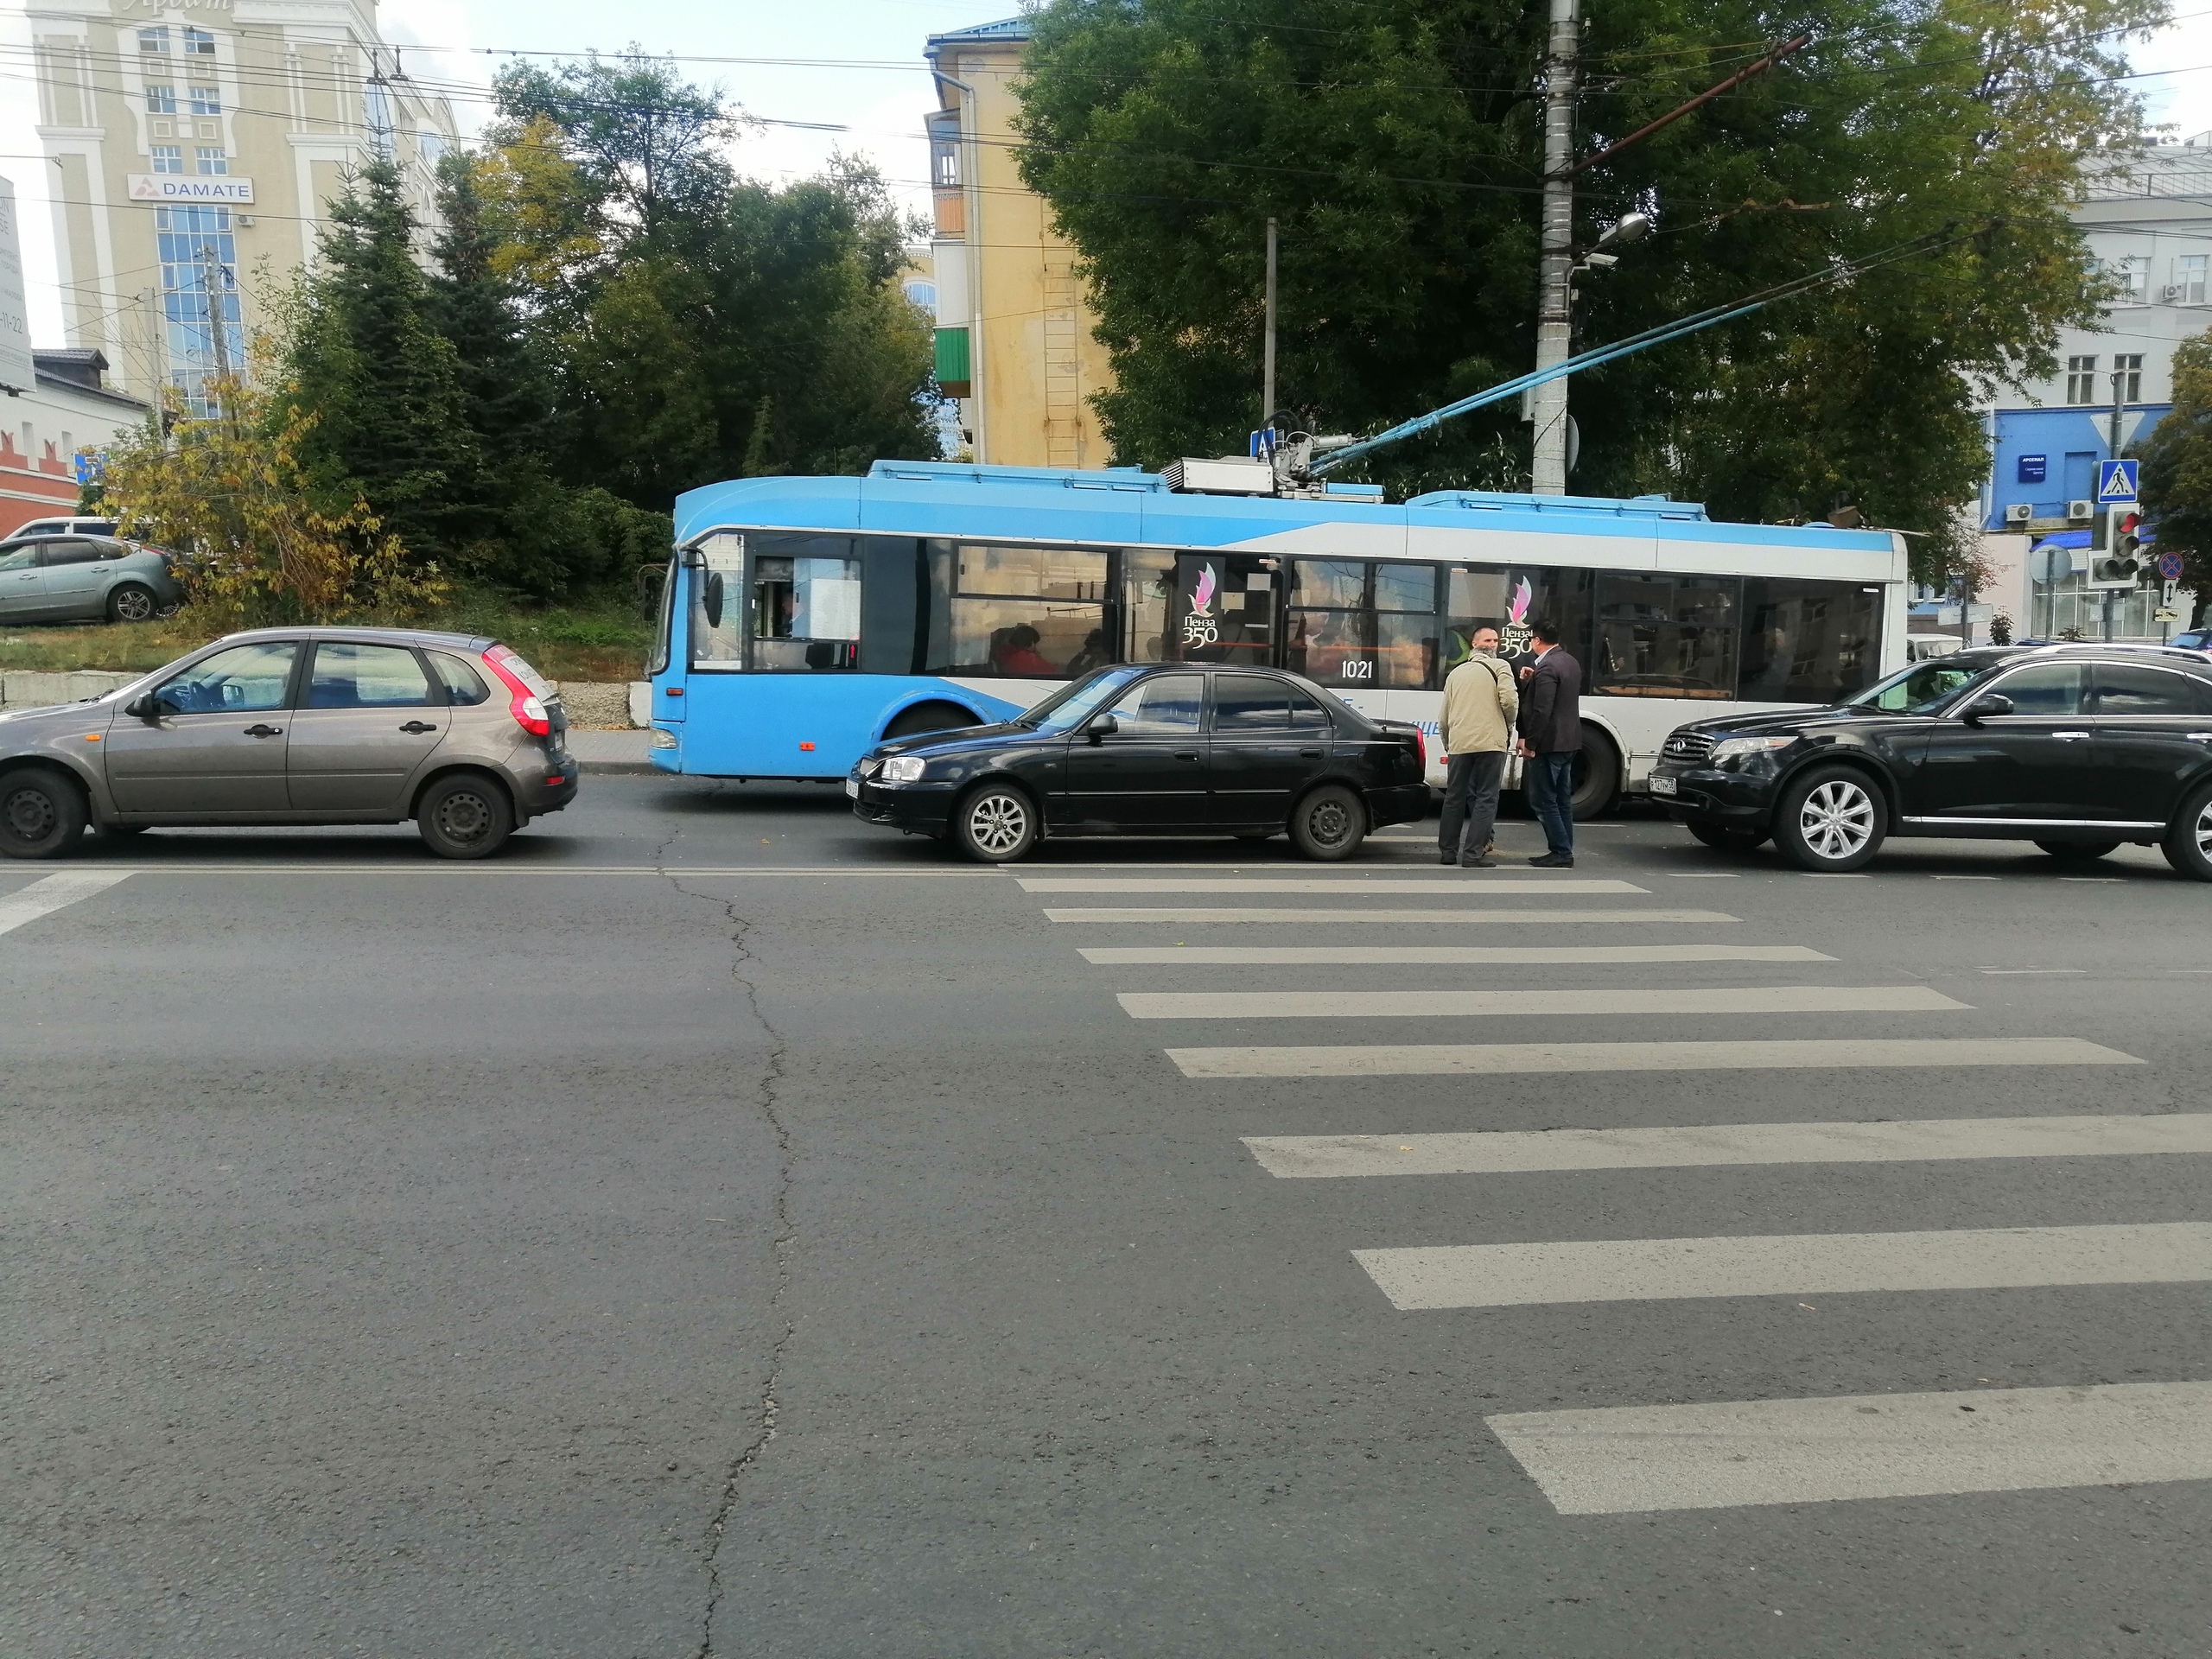 В Пензе два троллейбуса изменят маршруты